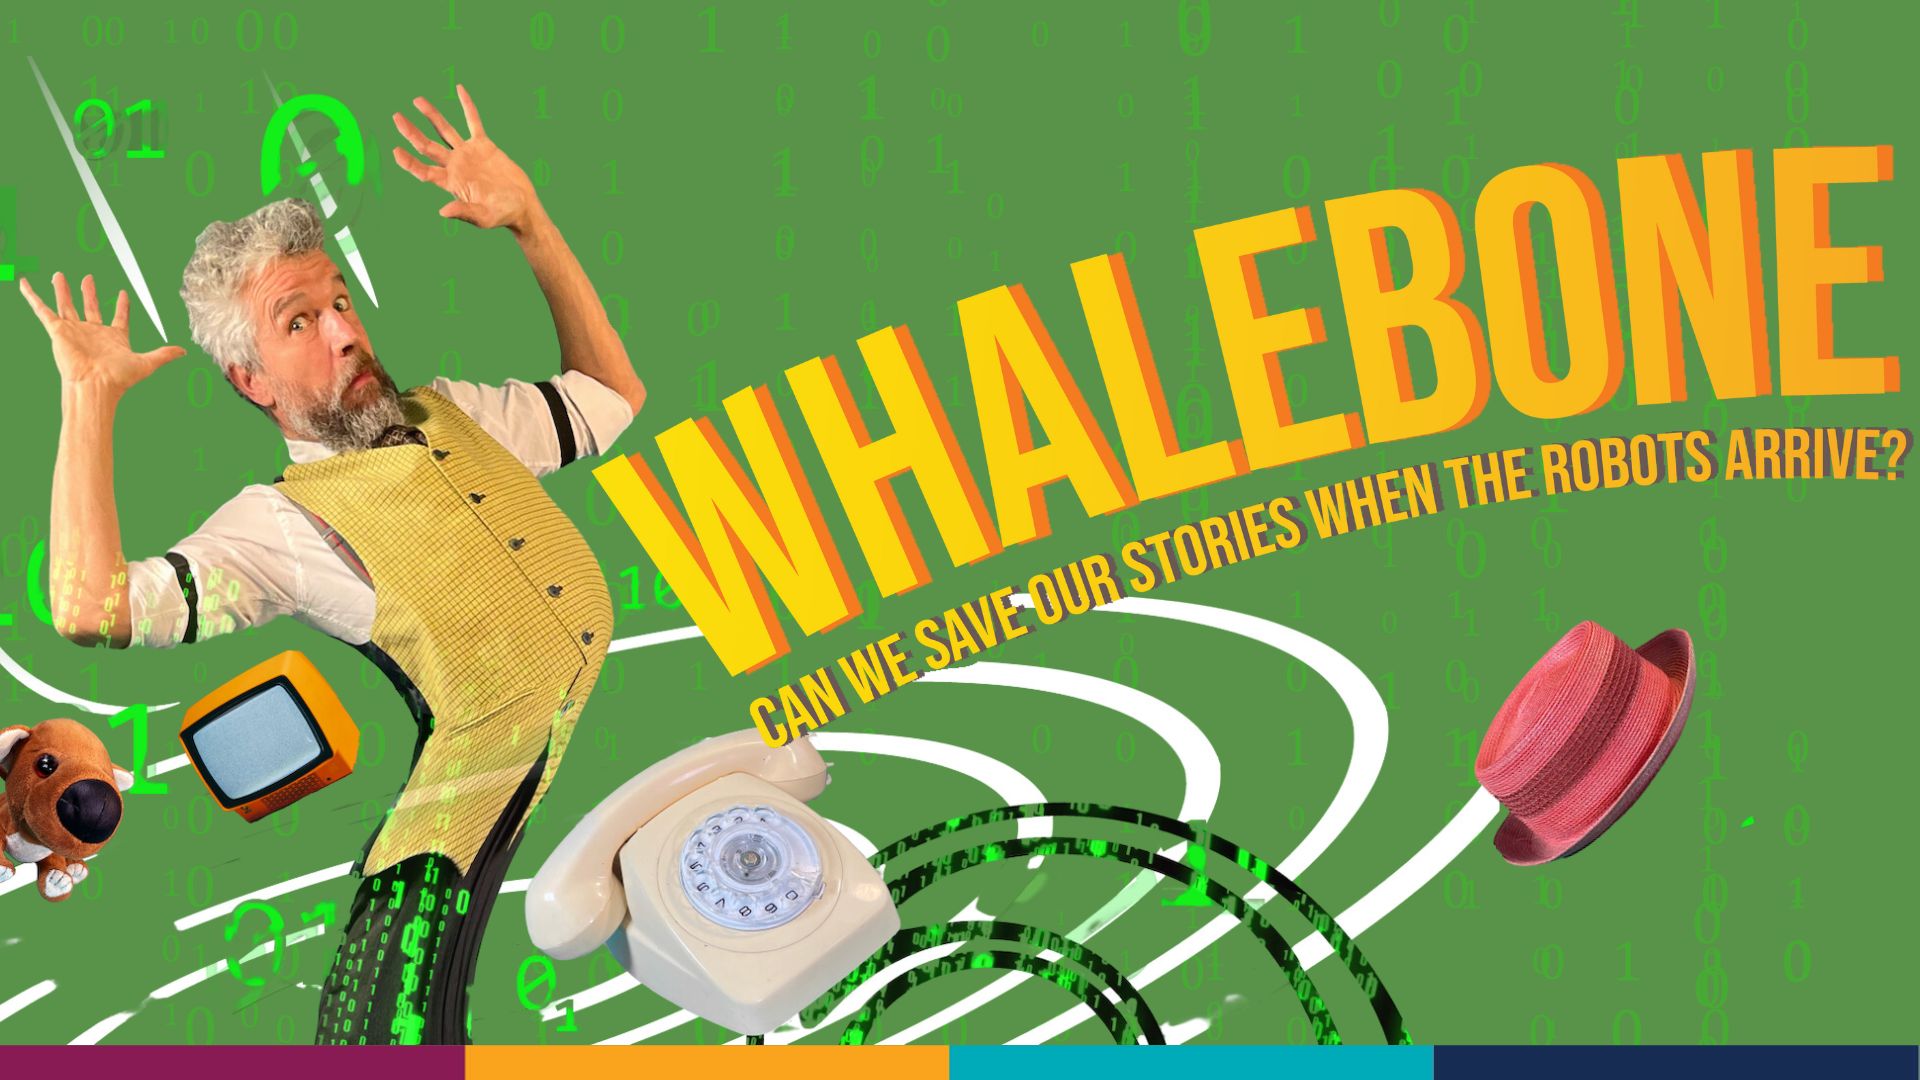 Whalebone - Children's theatre and bonus workshop